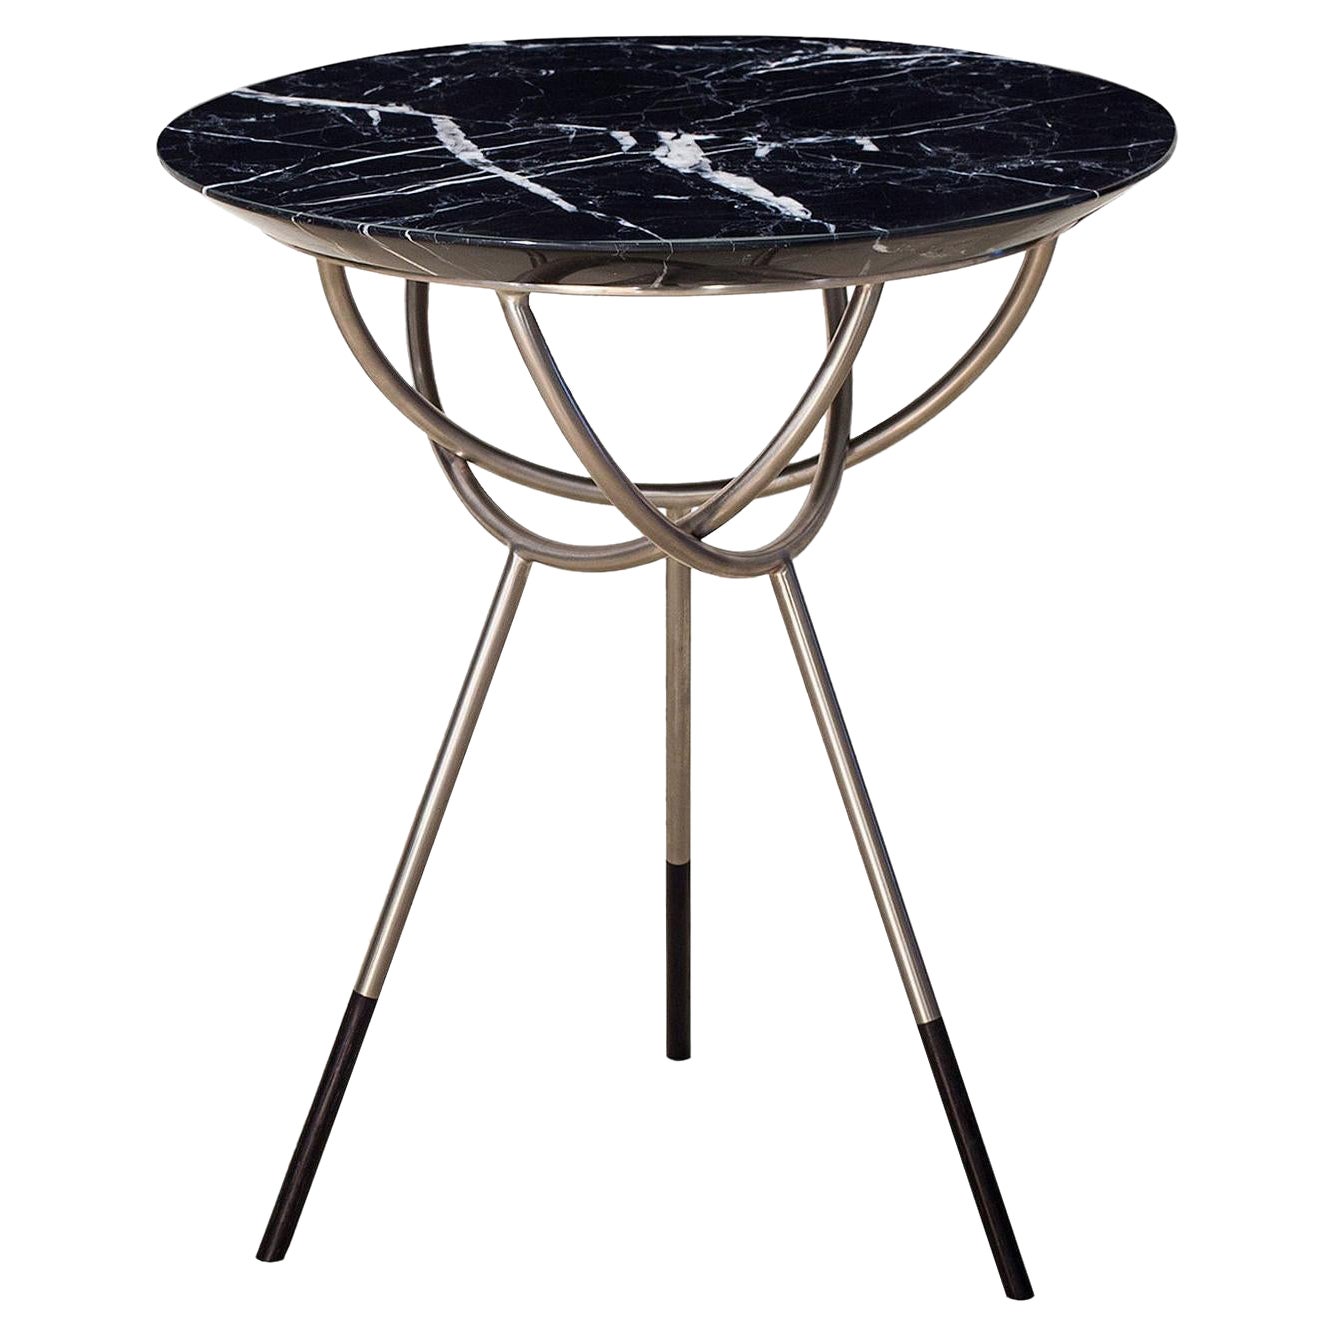 Table d'appoint Atlas en nickel satiné avec plateau en marbre noir par Avram Rusu Studio